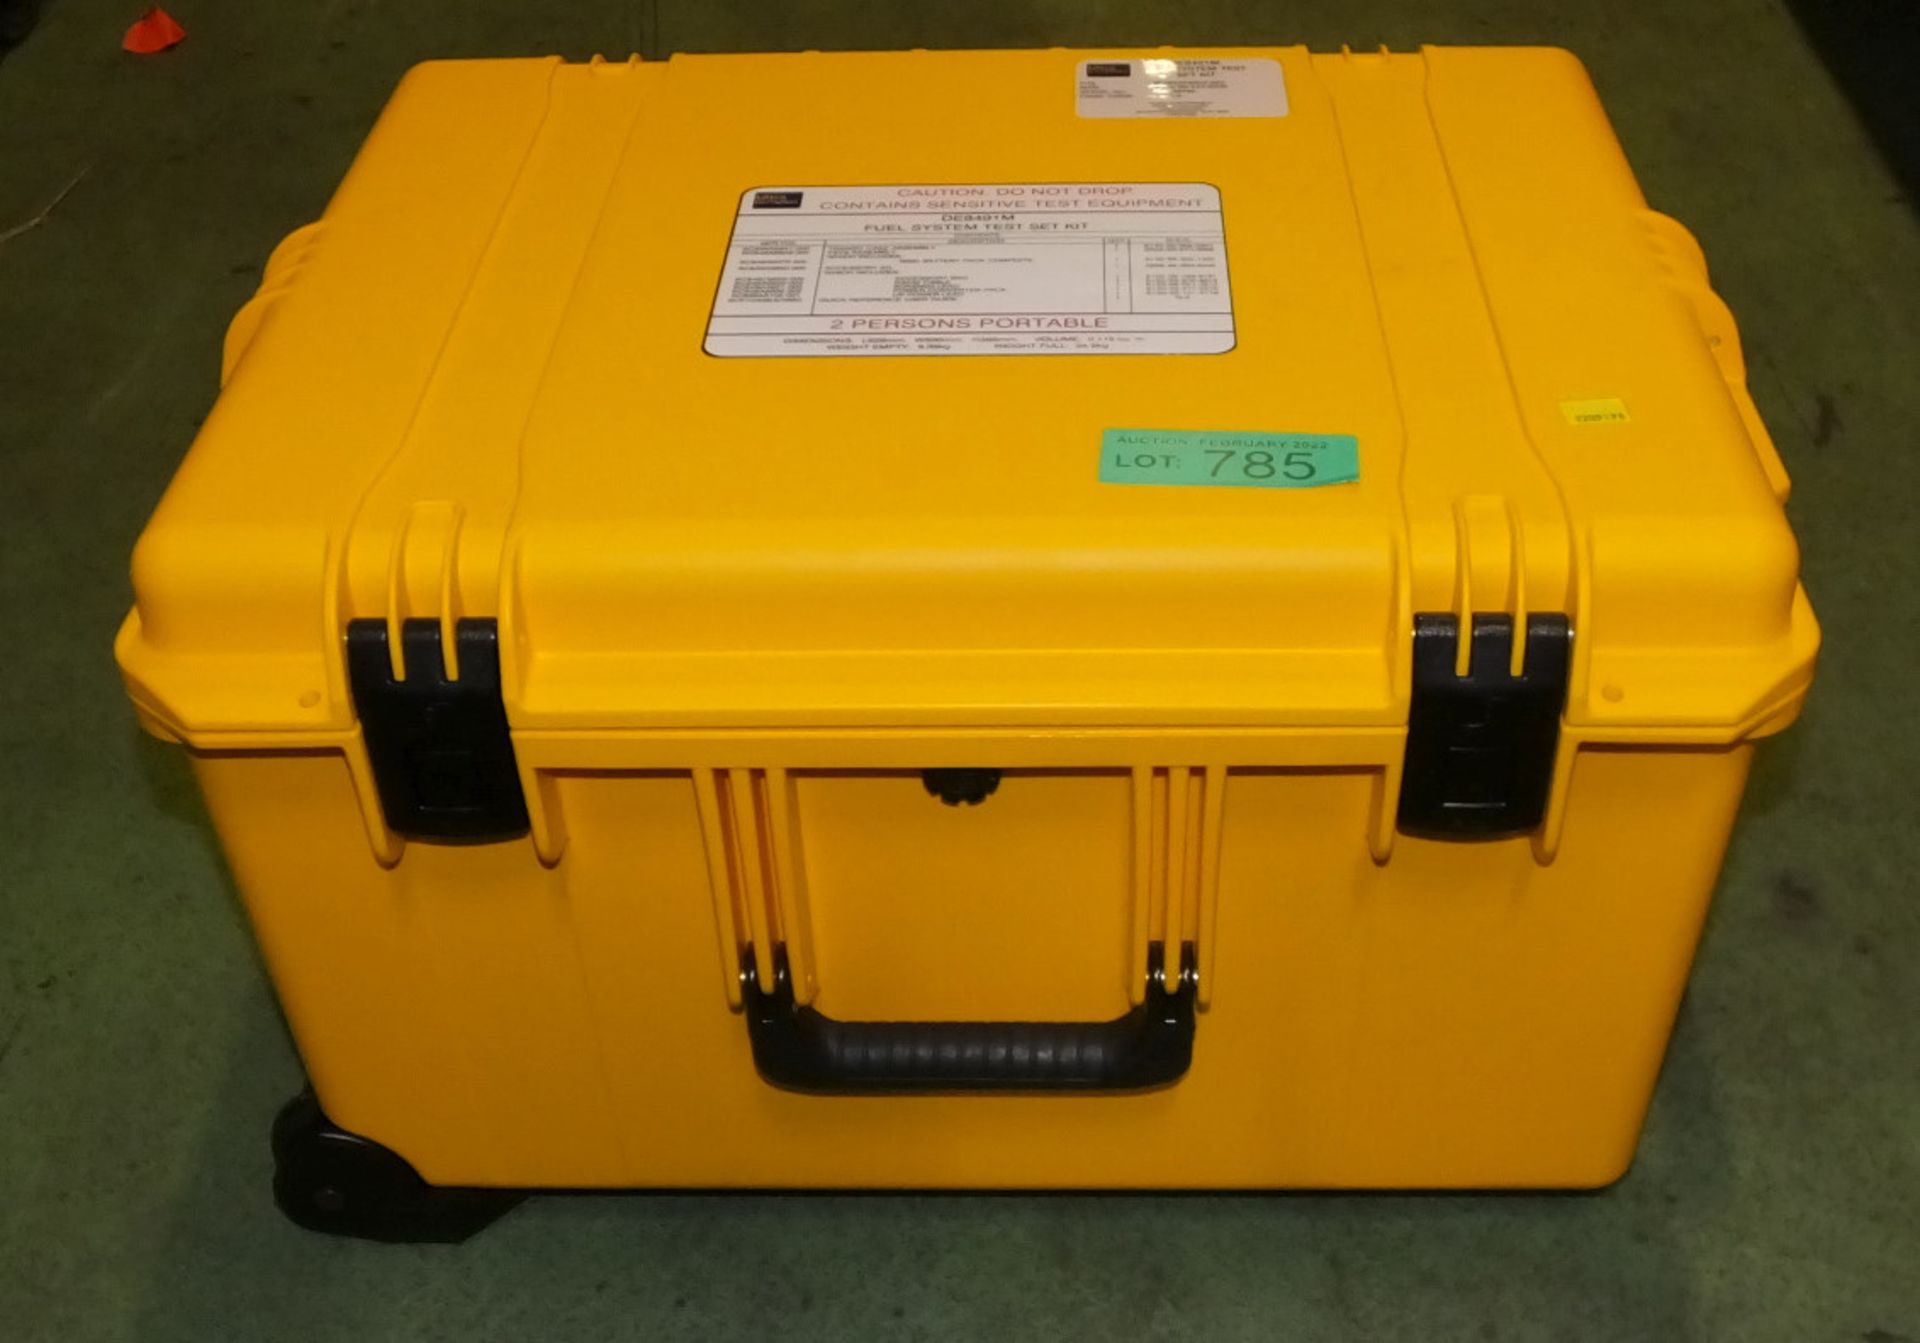 Ultra Electronics DE8491M Fuel System Test Set Kit in heavy duty carry case - Image 4 of 5